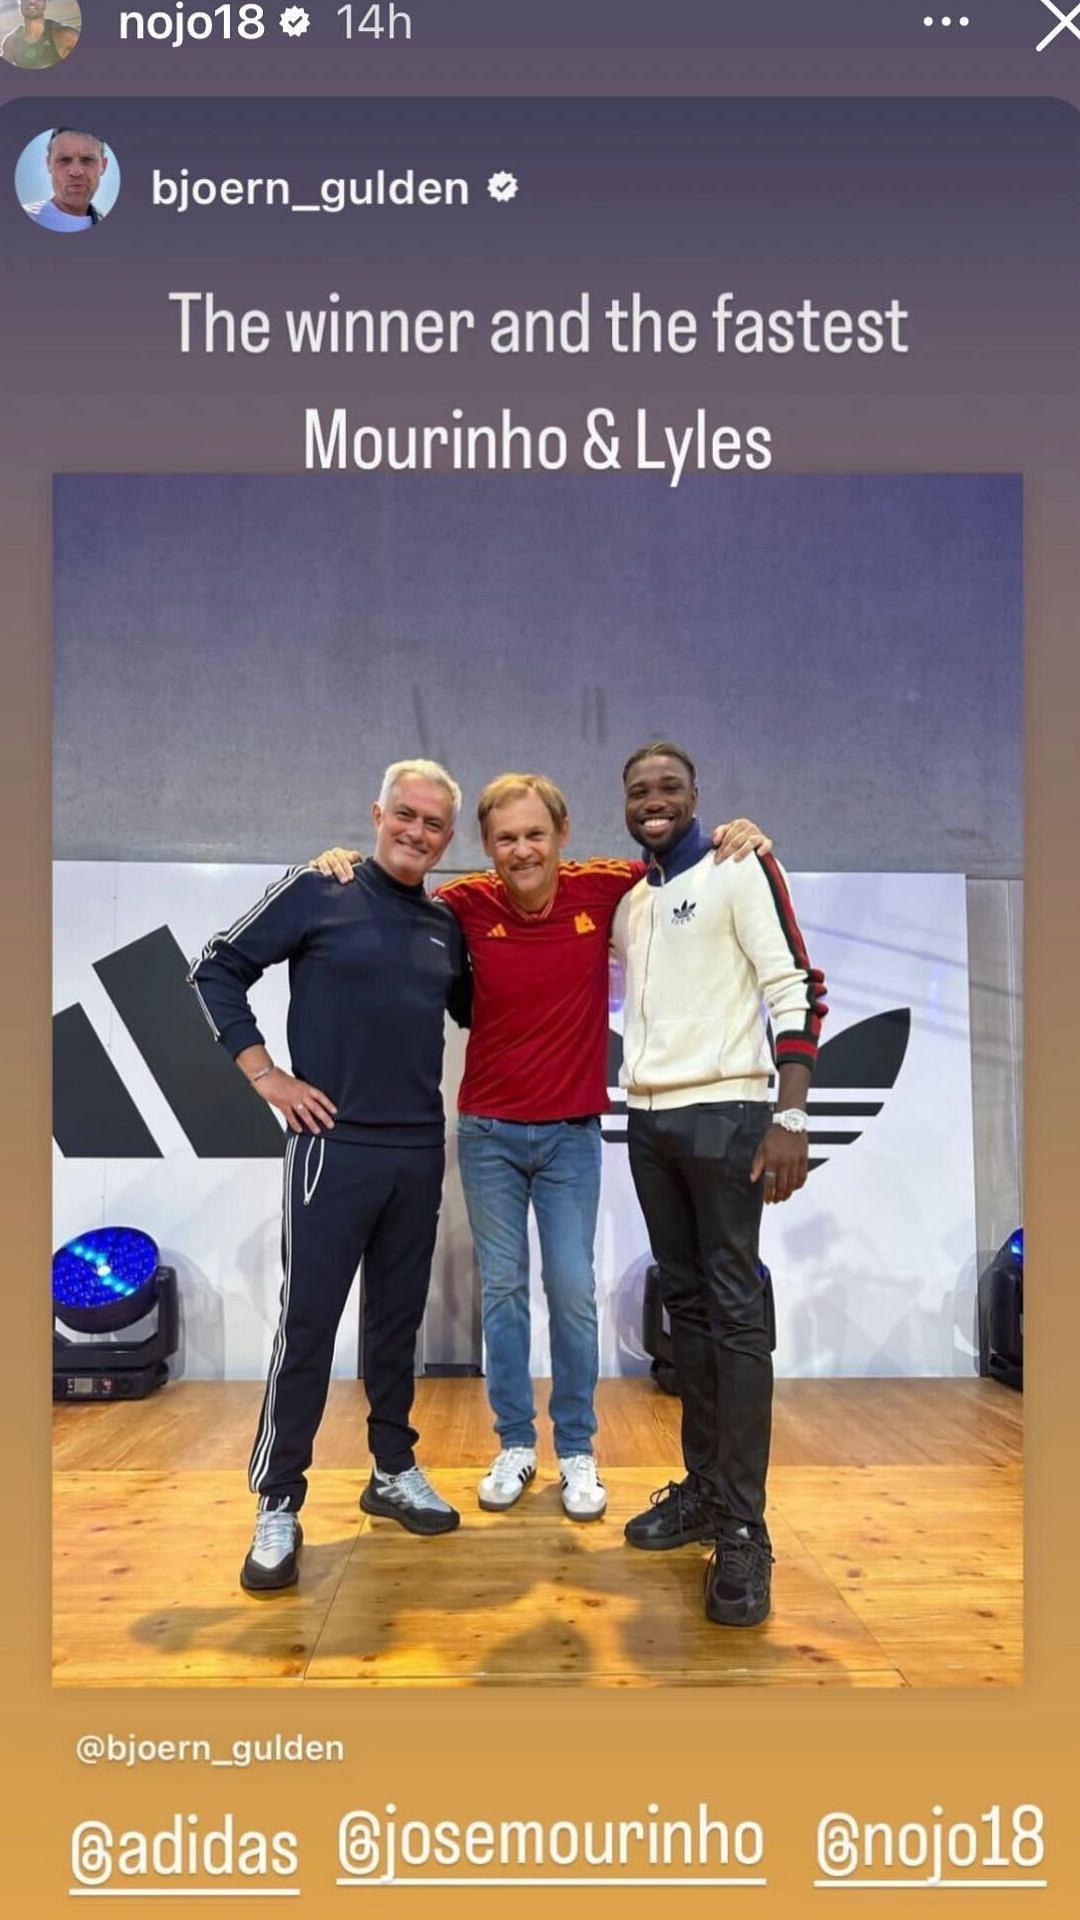 Noah Lyles, Jose Mourinho and Bjorn Gulden sharing a frame (Image via Instagram)